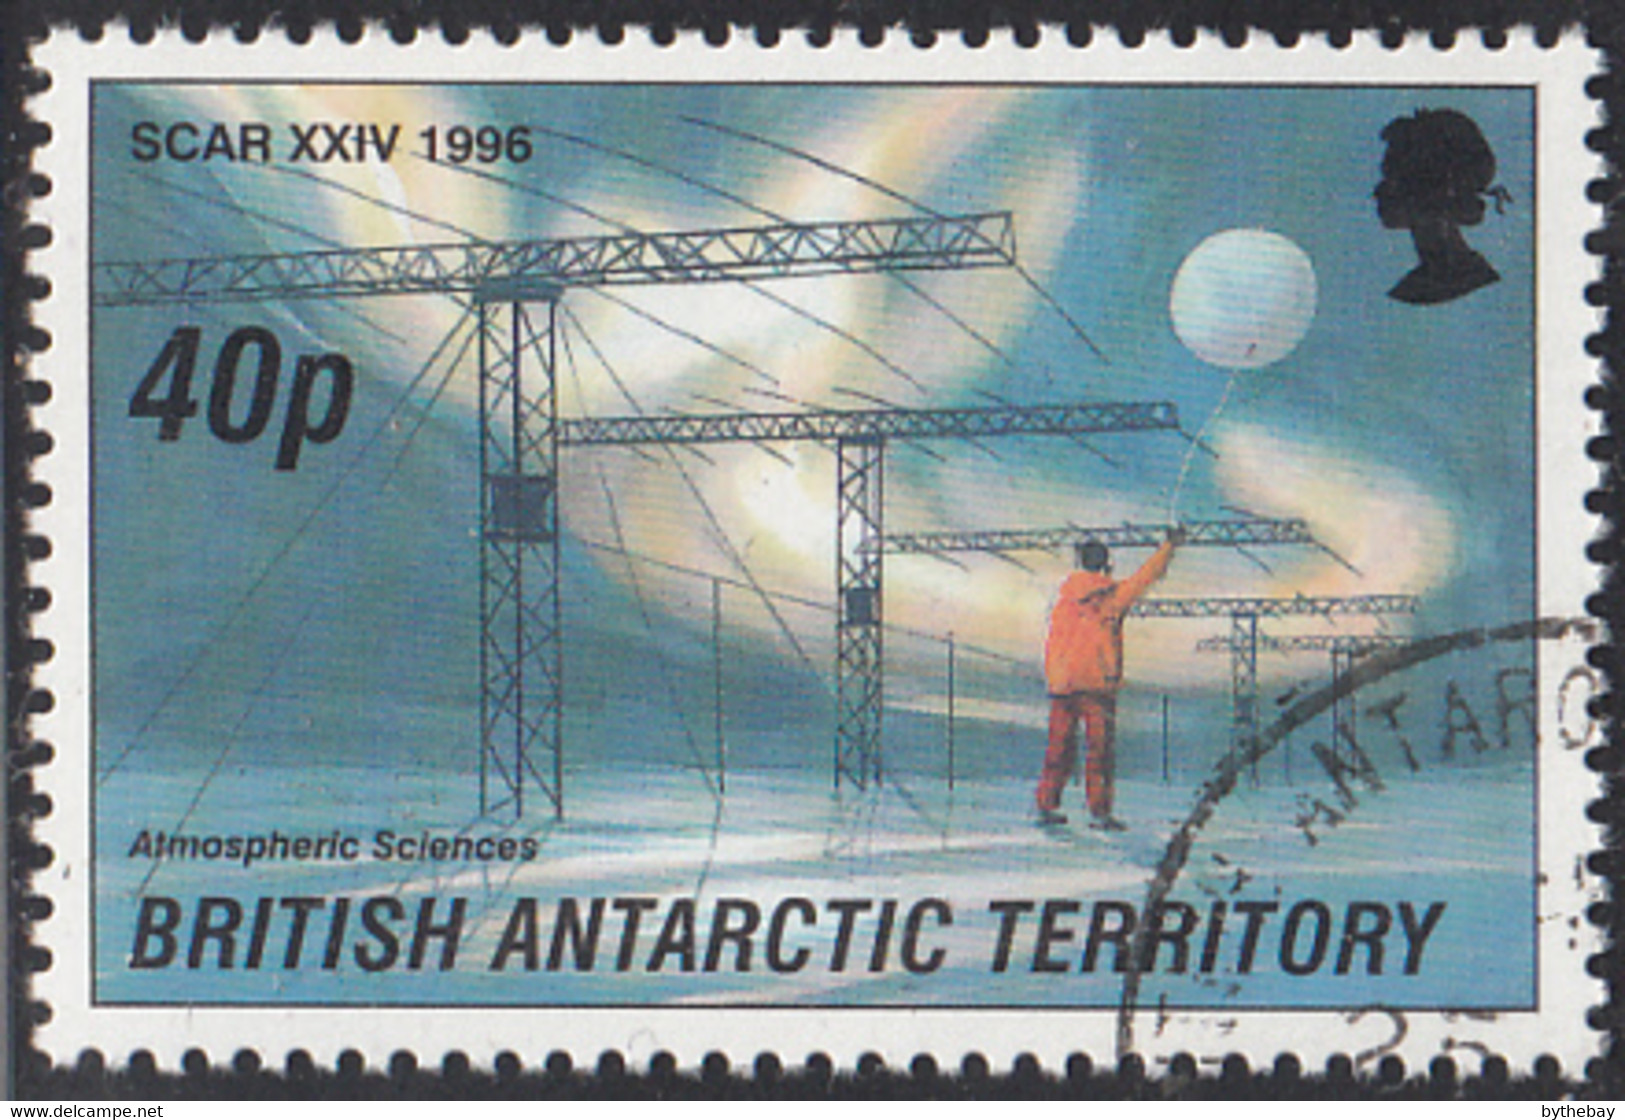 British Antarctic Territory 1996 Used Sc #237 40p Atmospheric Sciences SCAR - Used Stamps